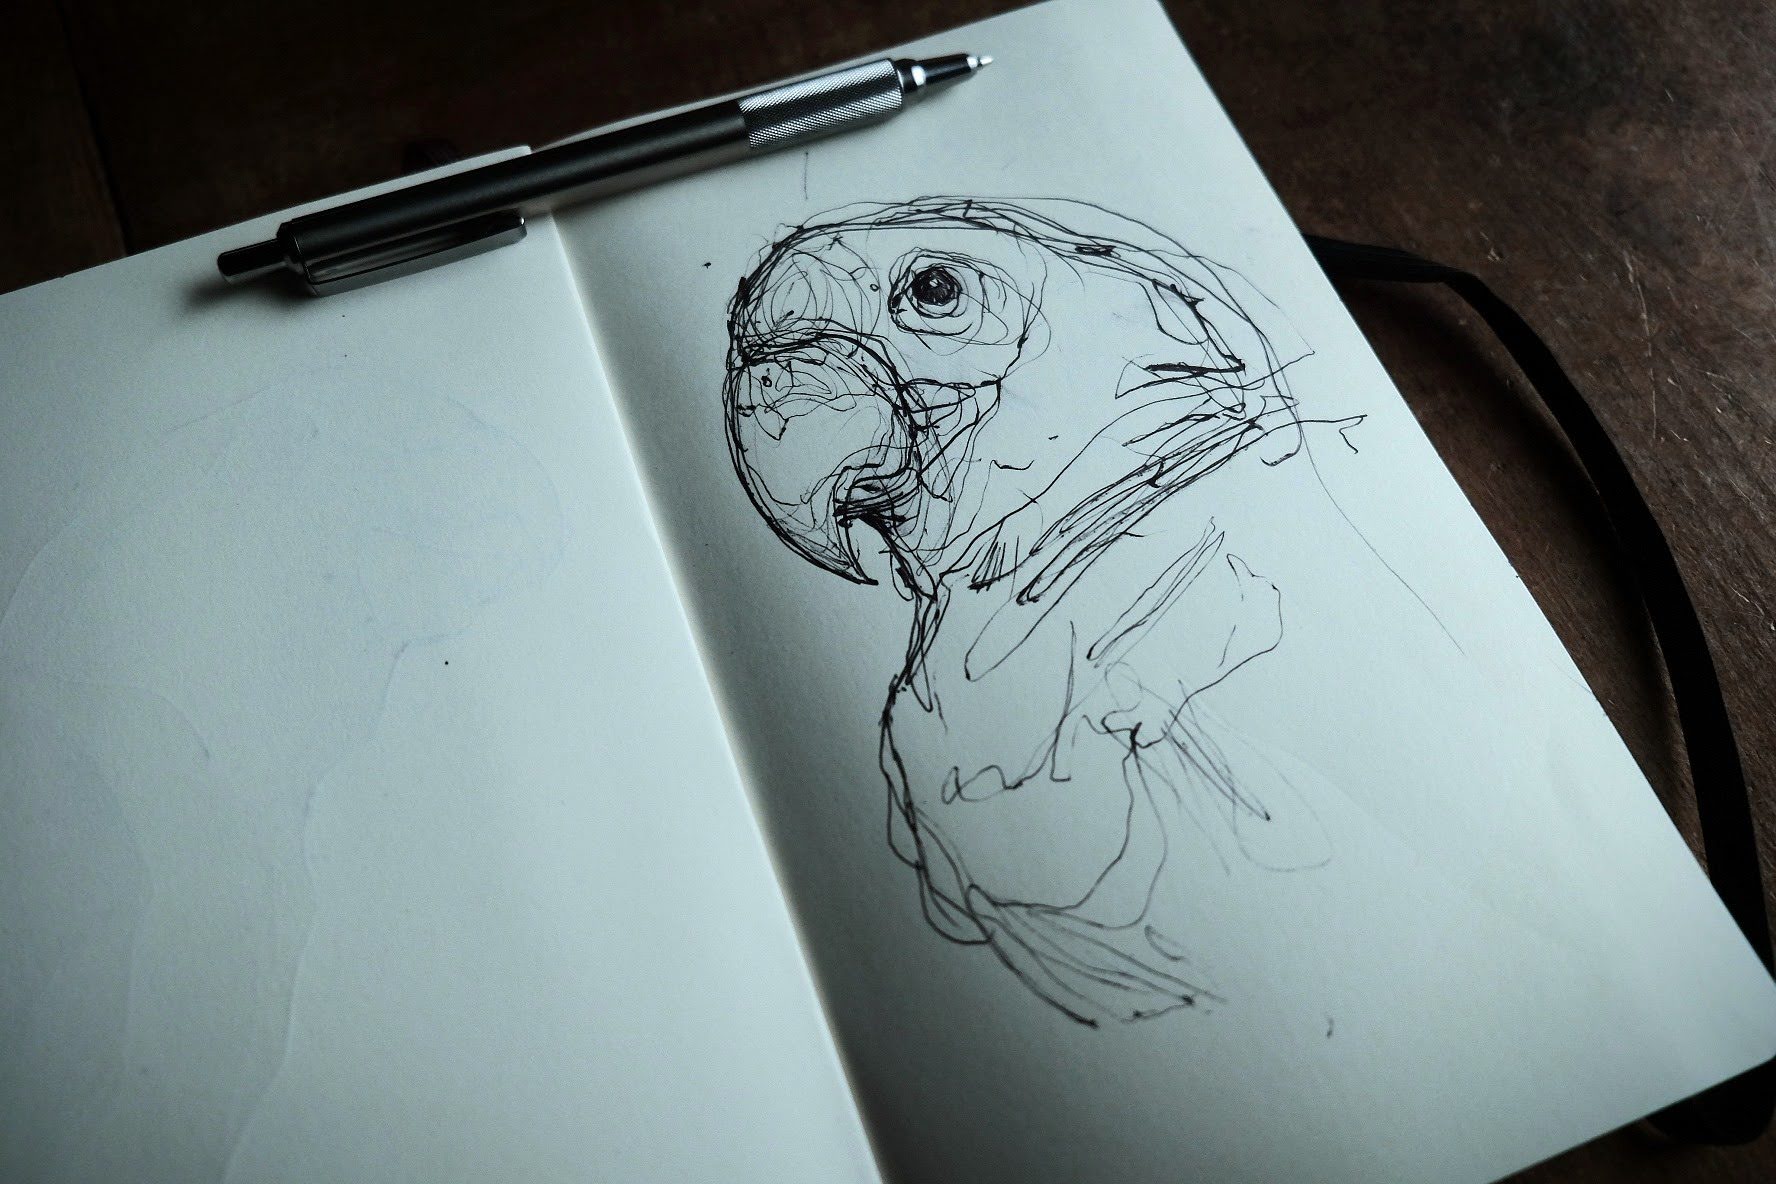 Parrot sketchbook drawing by Chris Wilson